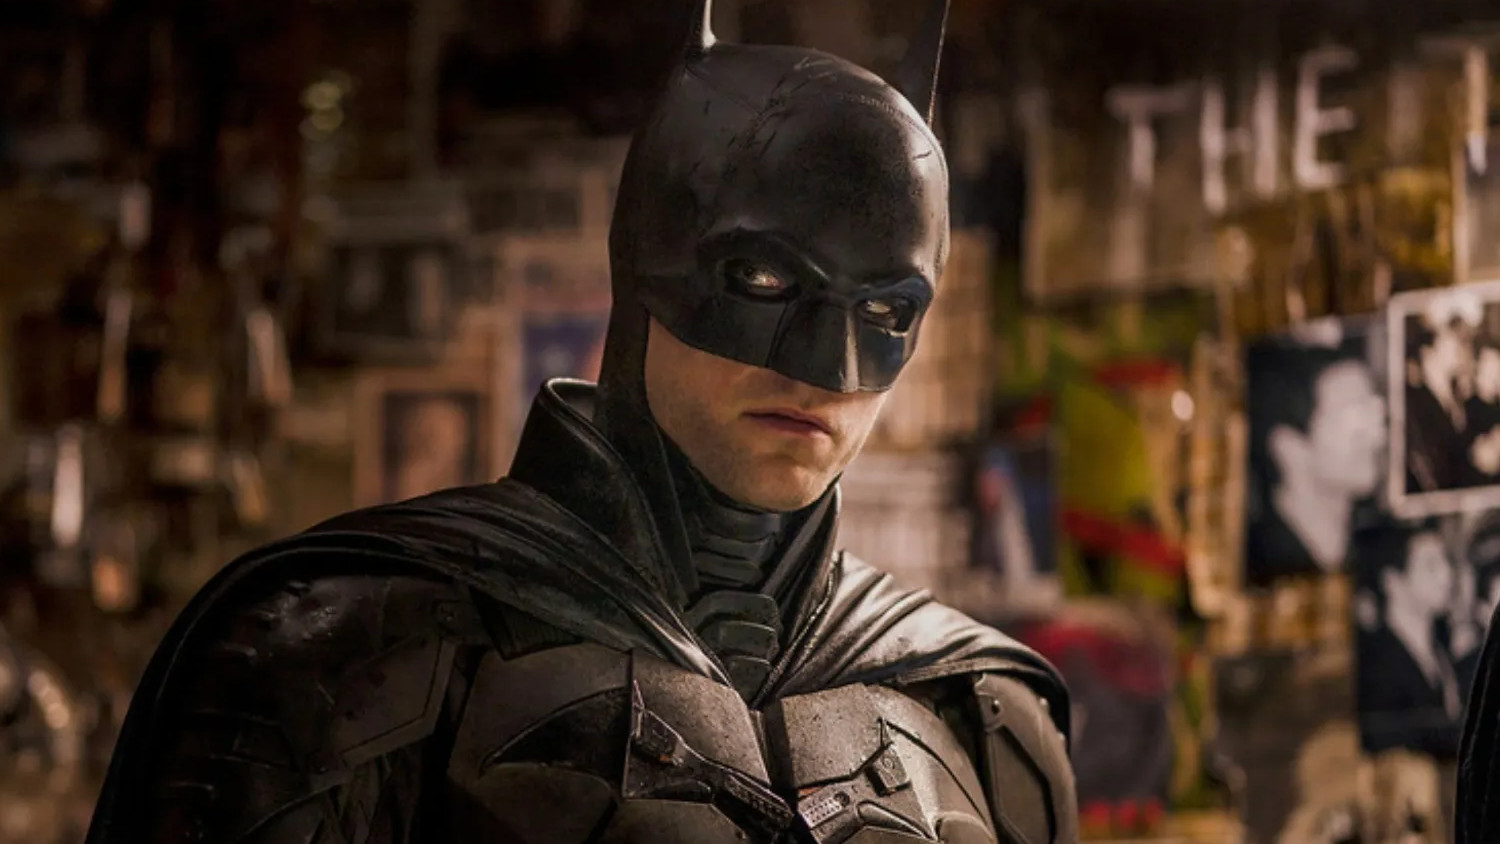 batman 2 release date pushed back year